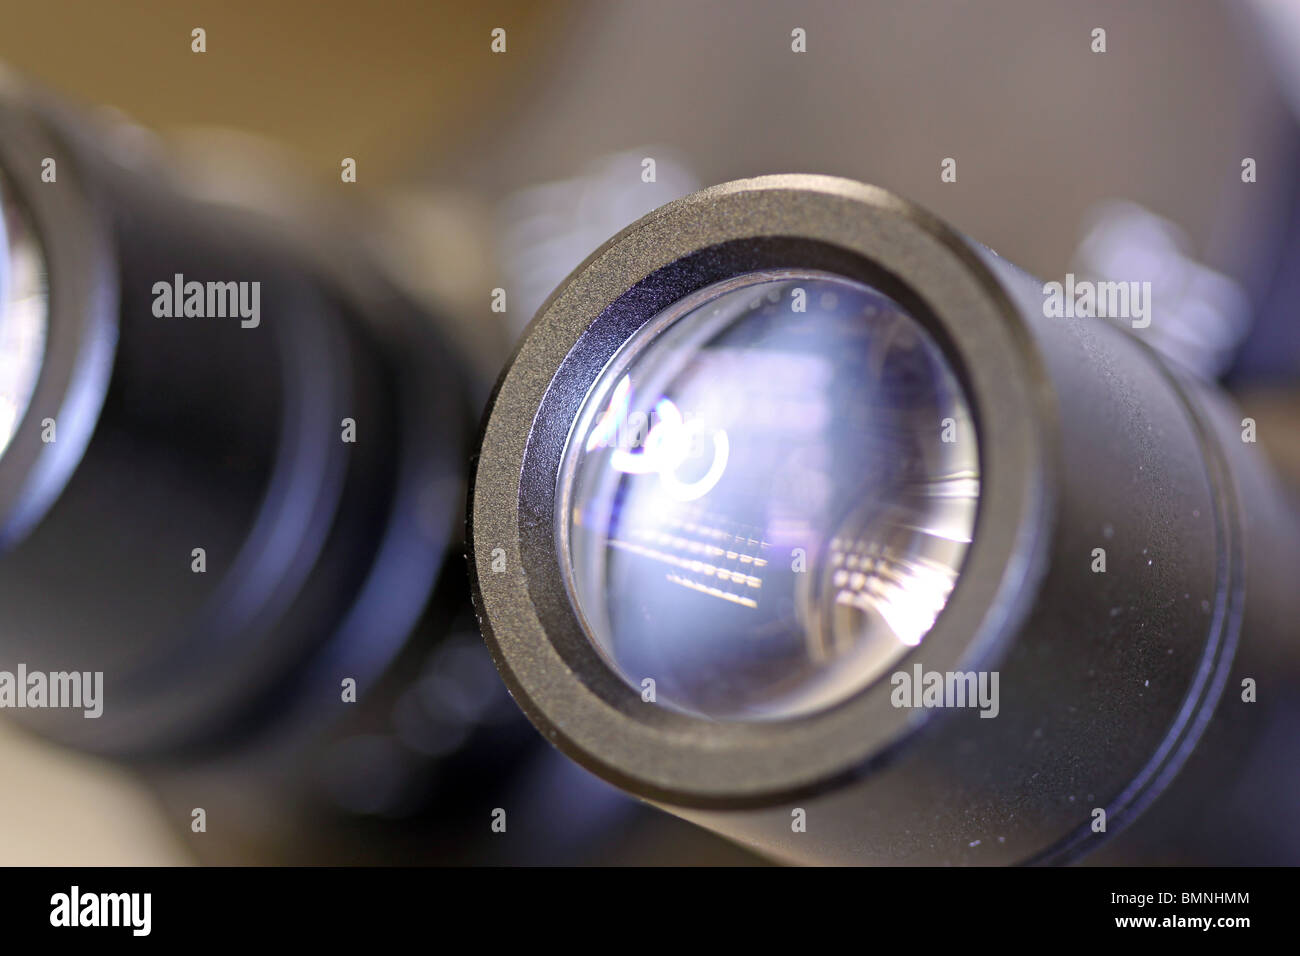 binocular microscope close up of eye piece Stock Photo